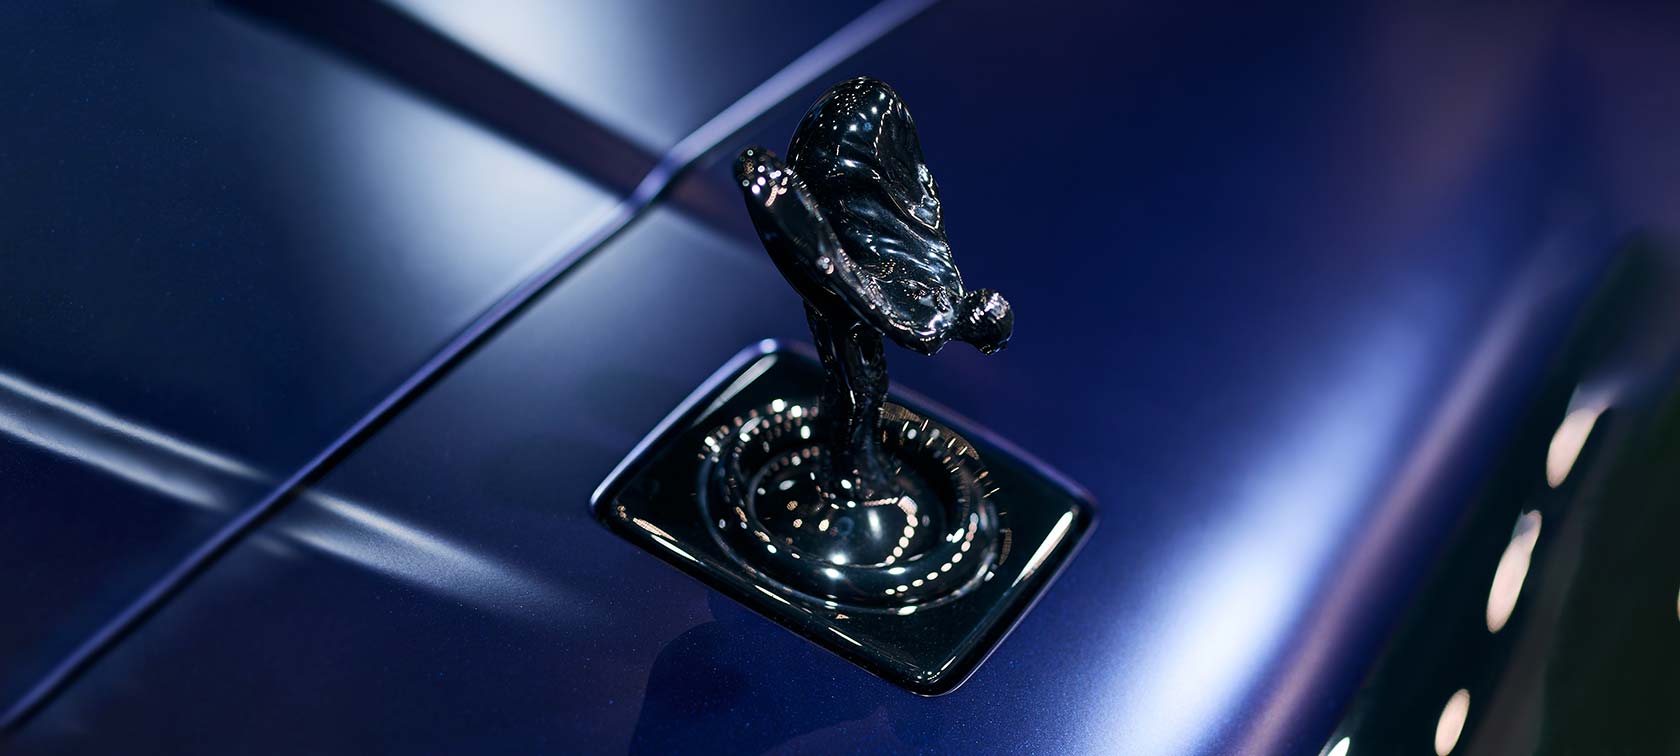 Thoughts on Rolls Royce On their latest rebranding  by Dheeraj Nanduri   ThroughDesign  Medium